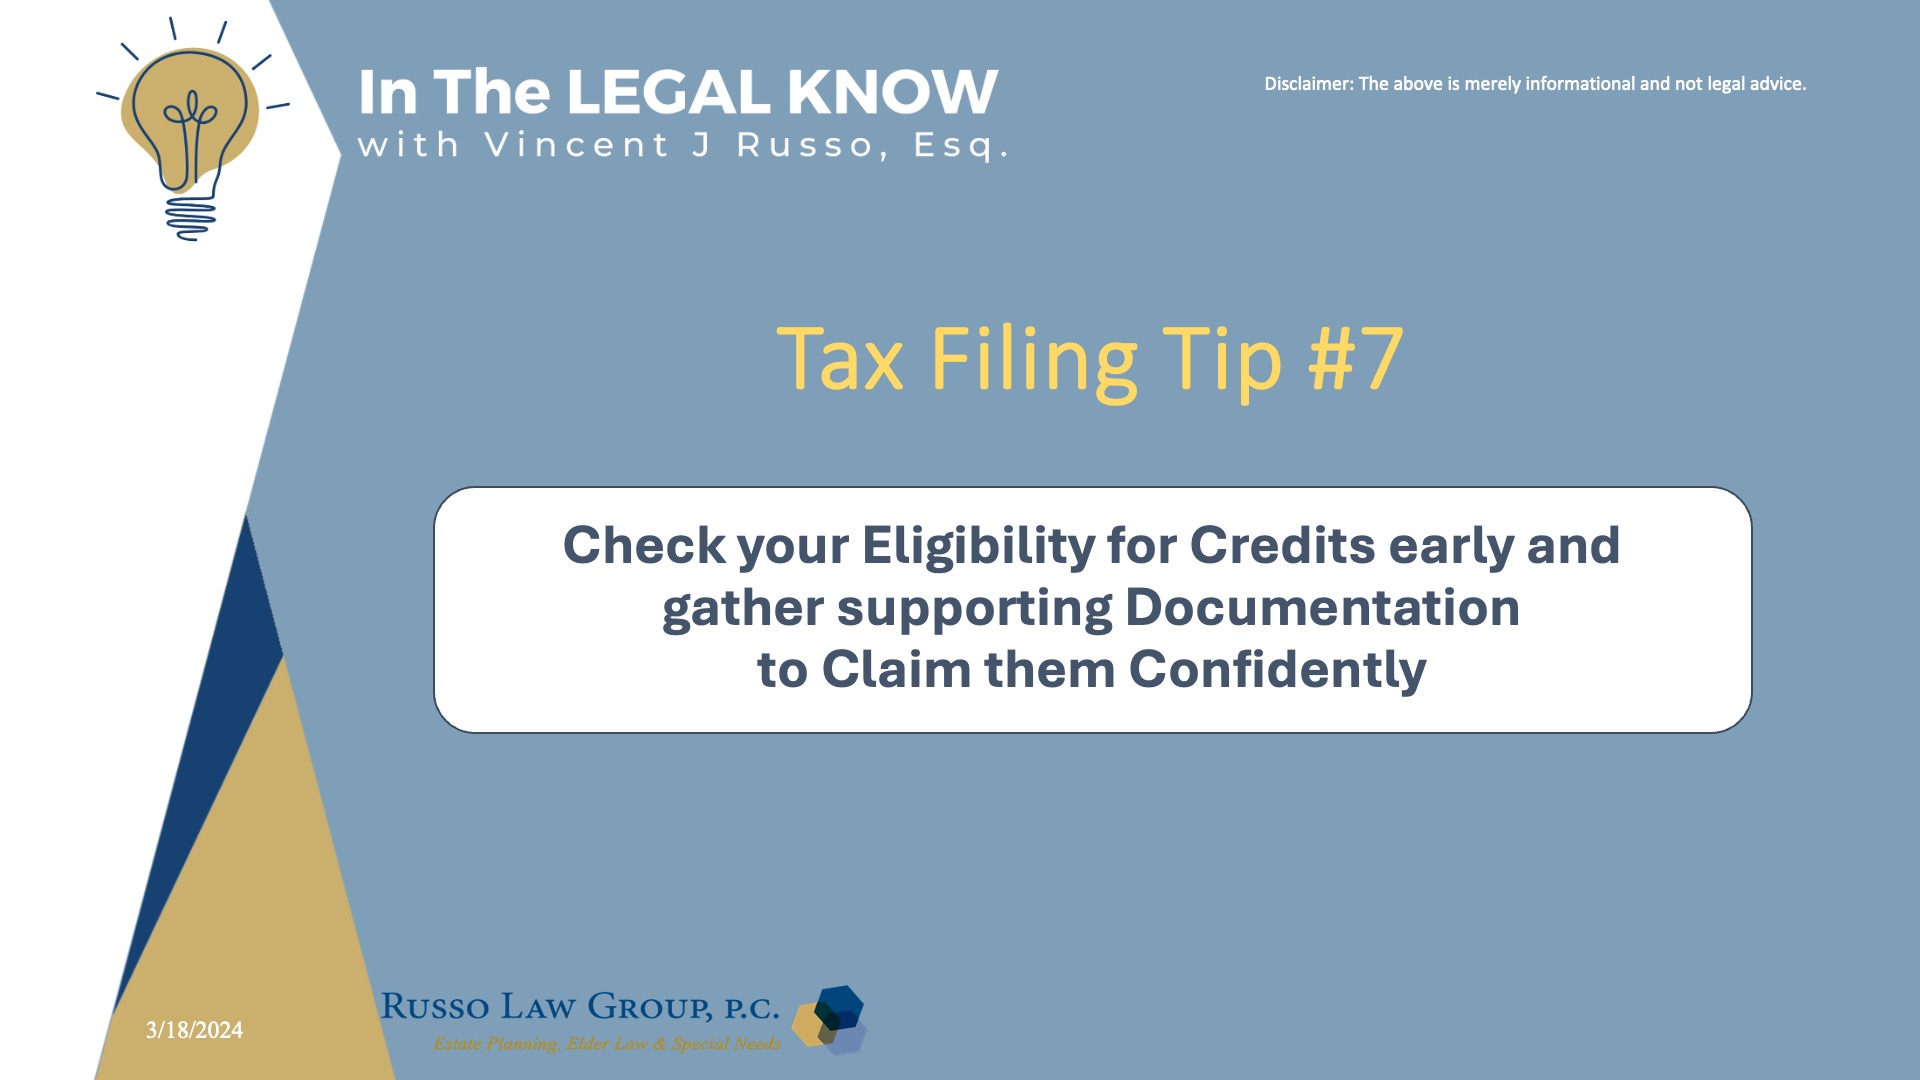 Tax Filing Tip #7